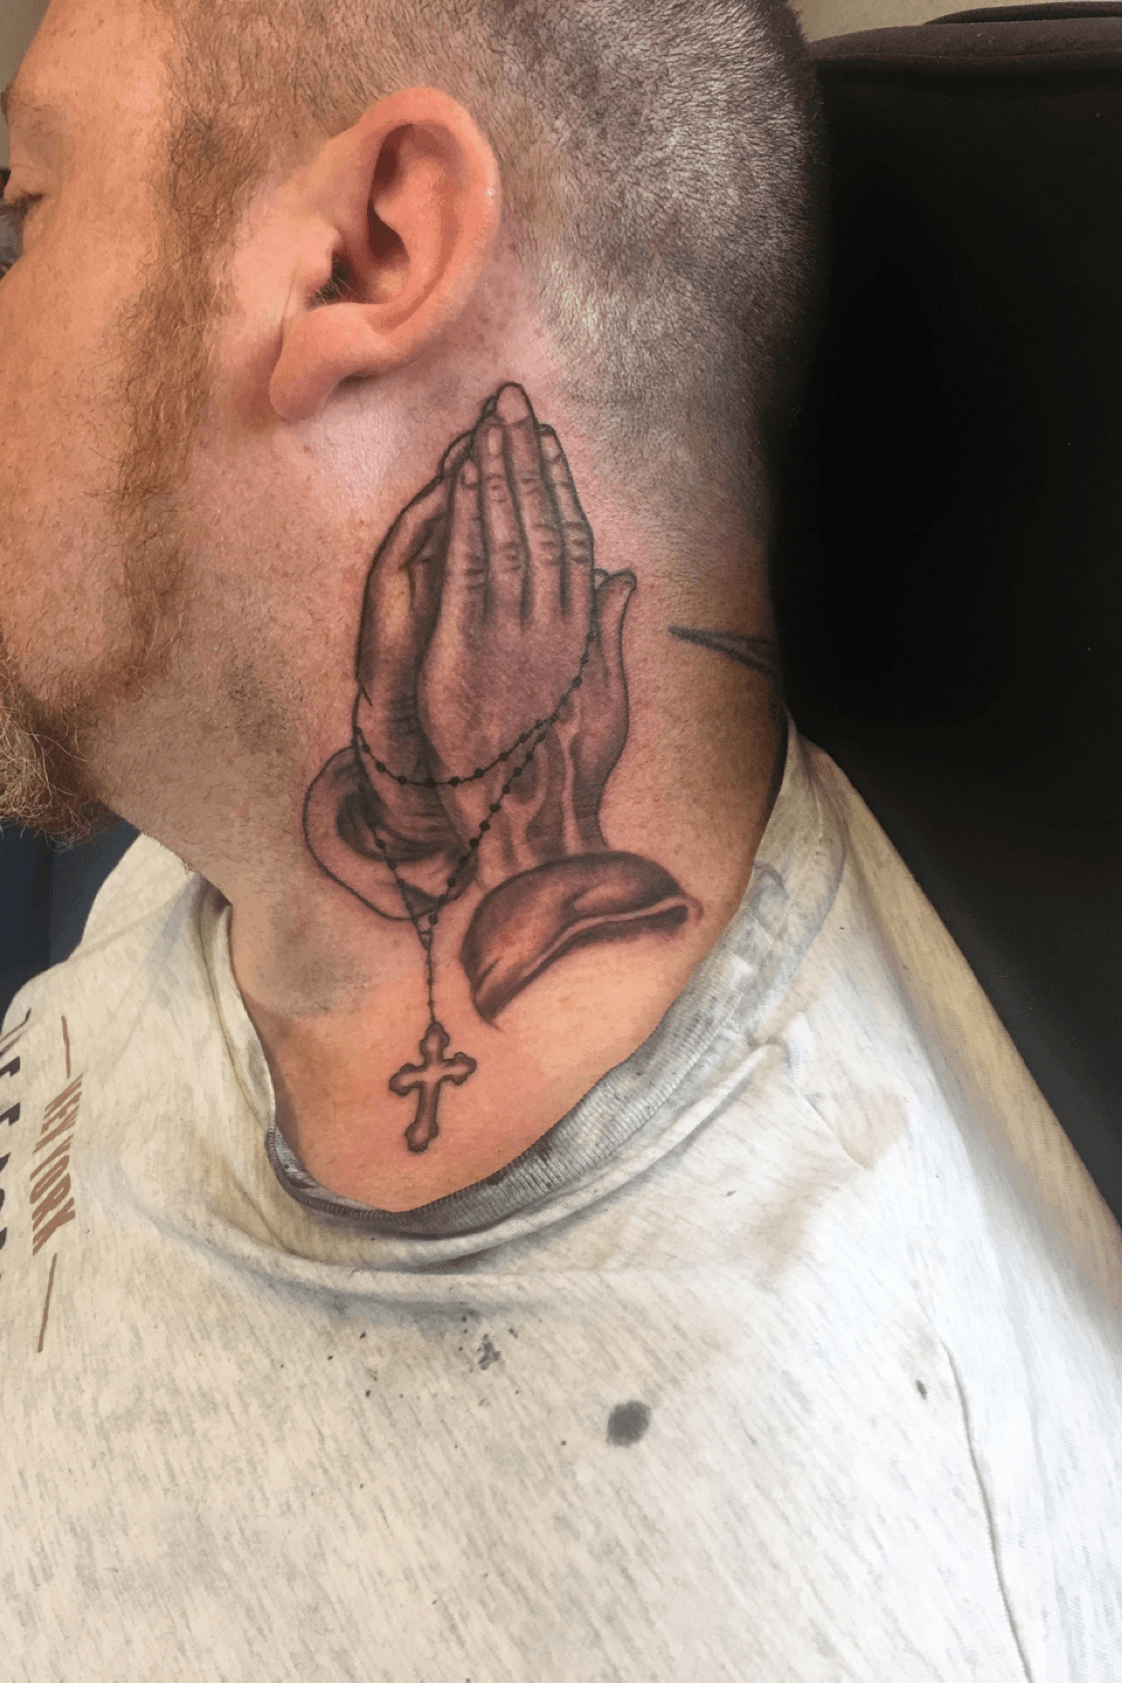 Star Ink Tattoos  Piercings  PRAYING HANDS  adamolvera0817  starink254  realistictattoo waco texas tattooshop tattoo praying  hands art necktattoo  Facebook